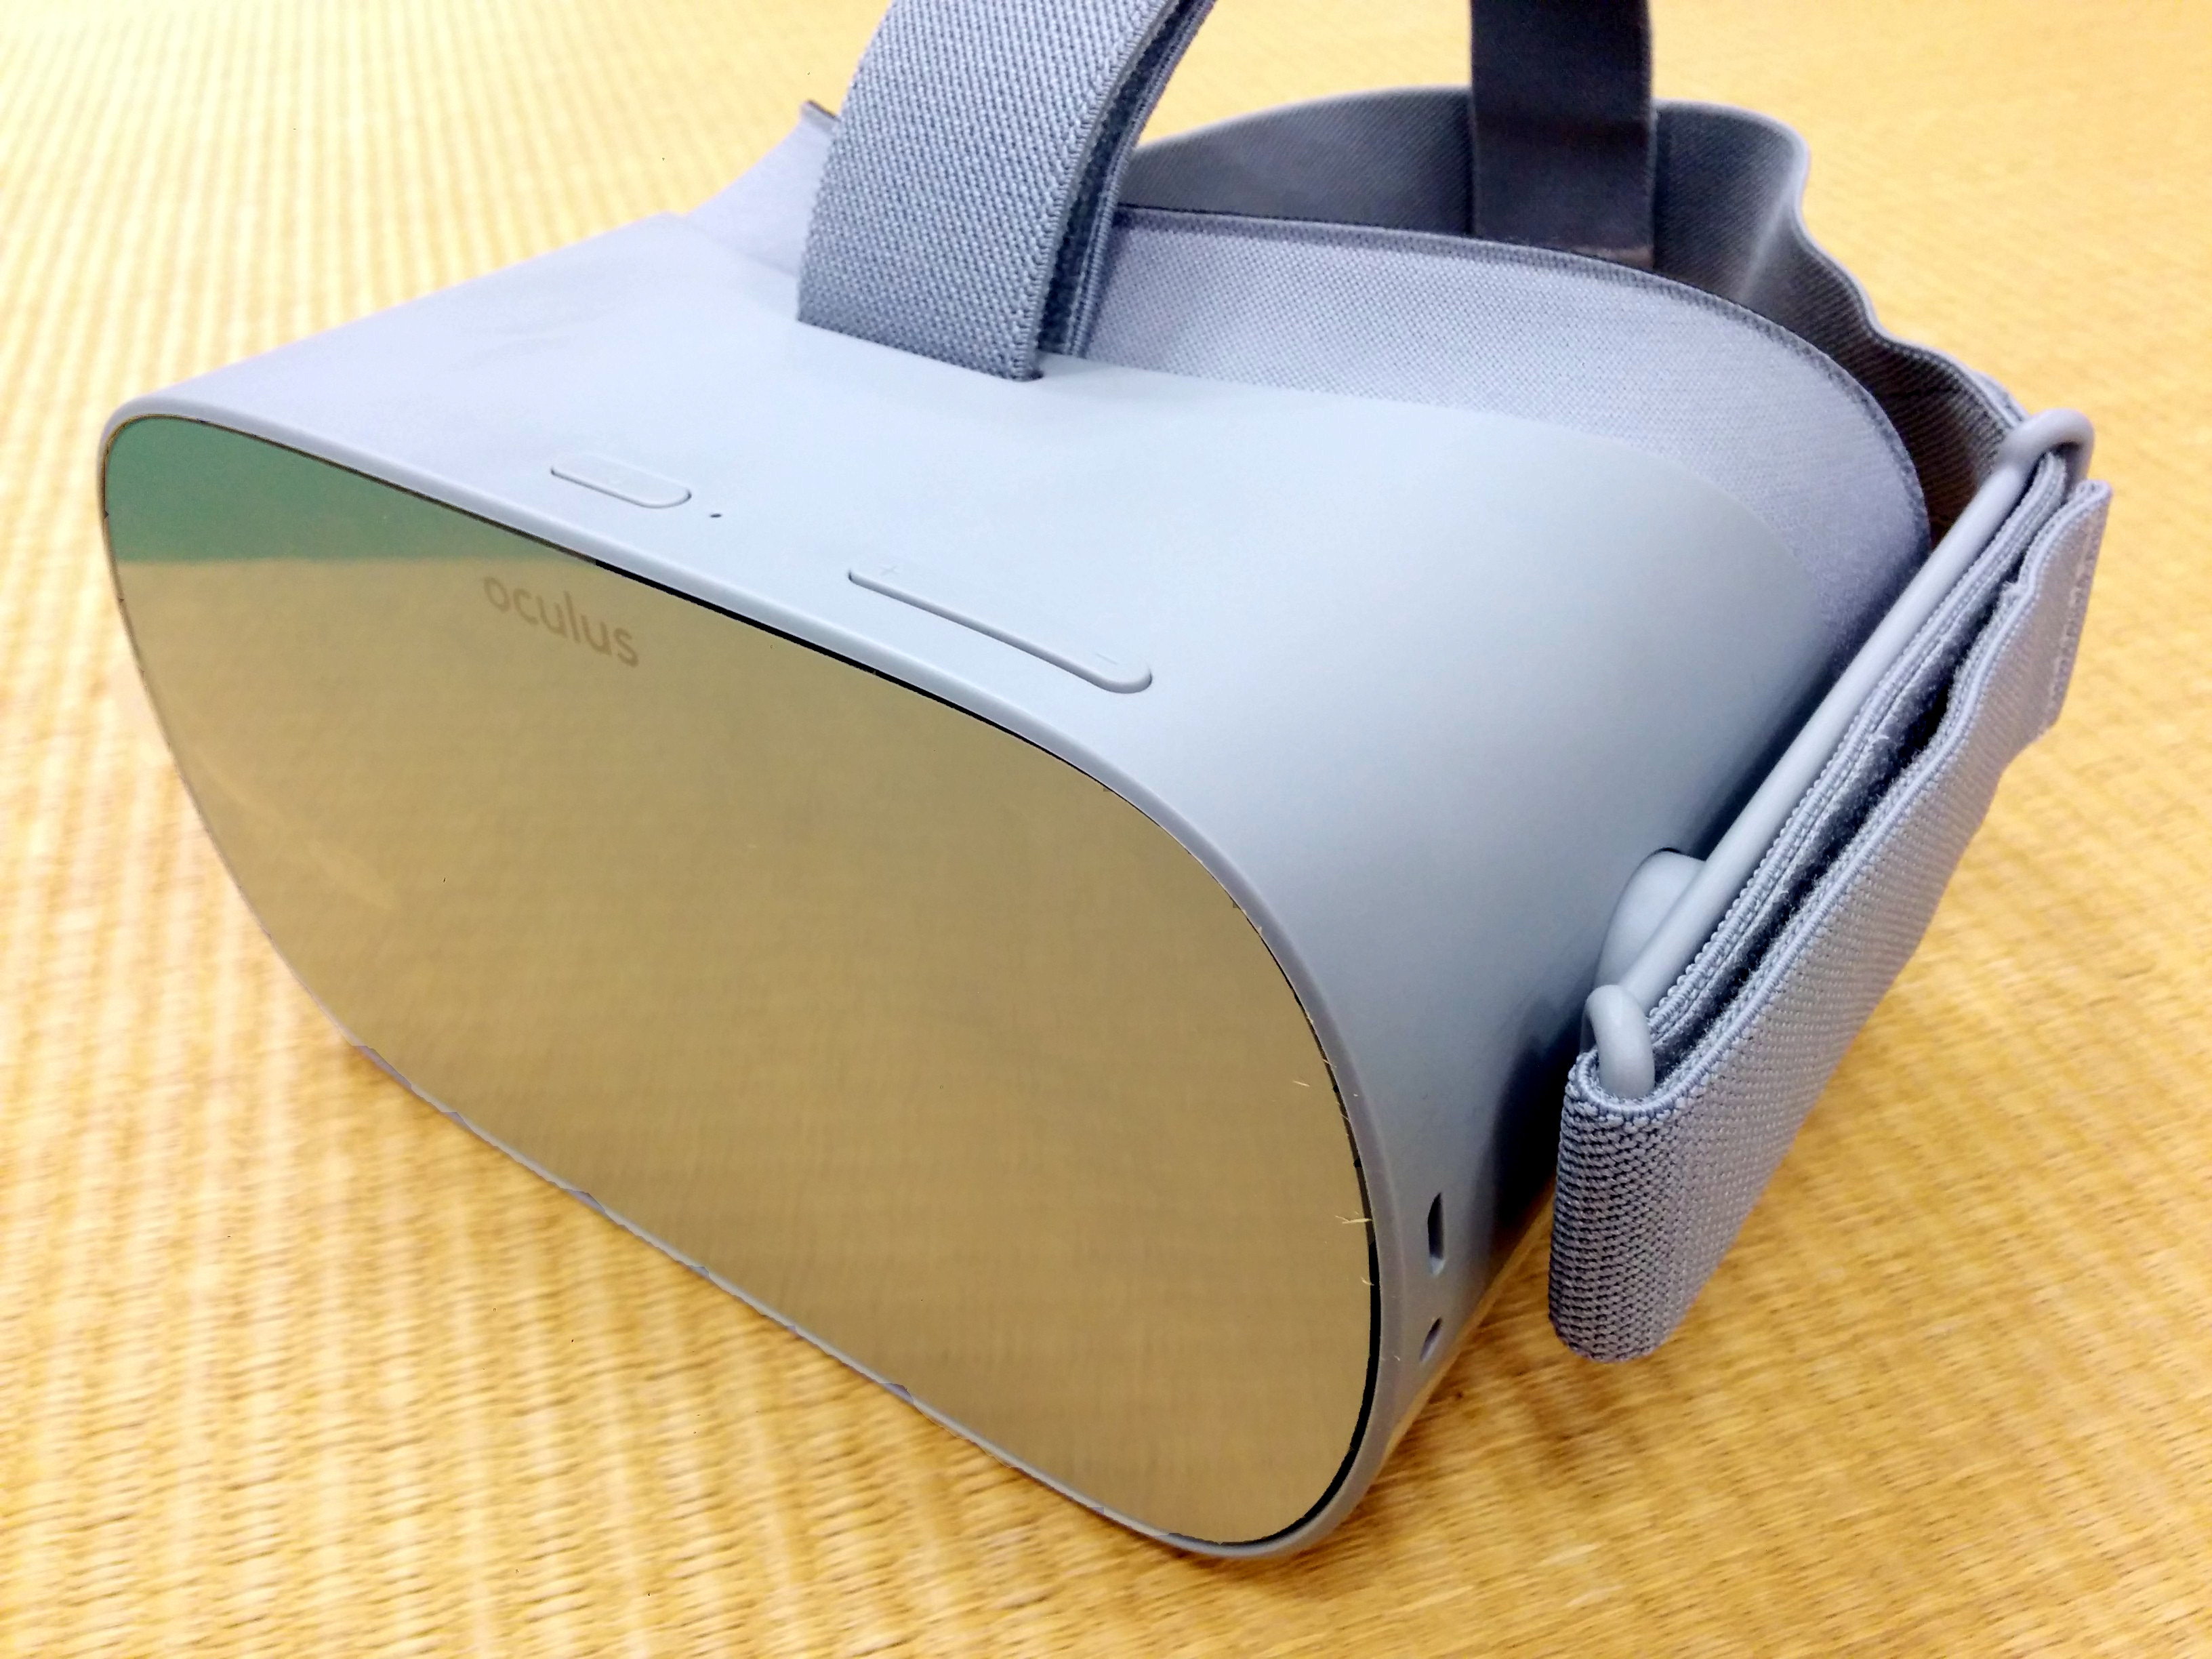 oculus go release date